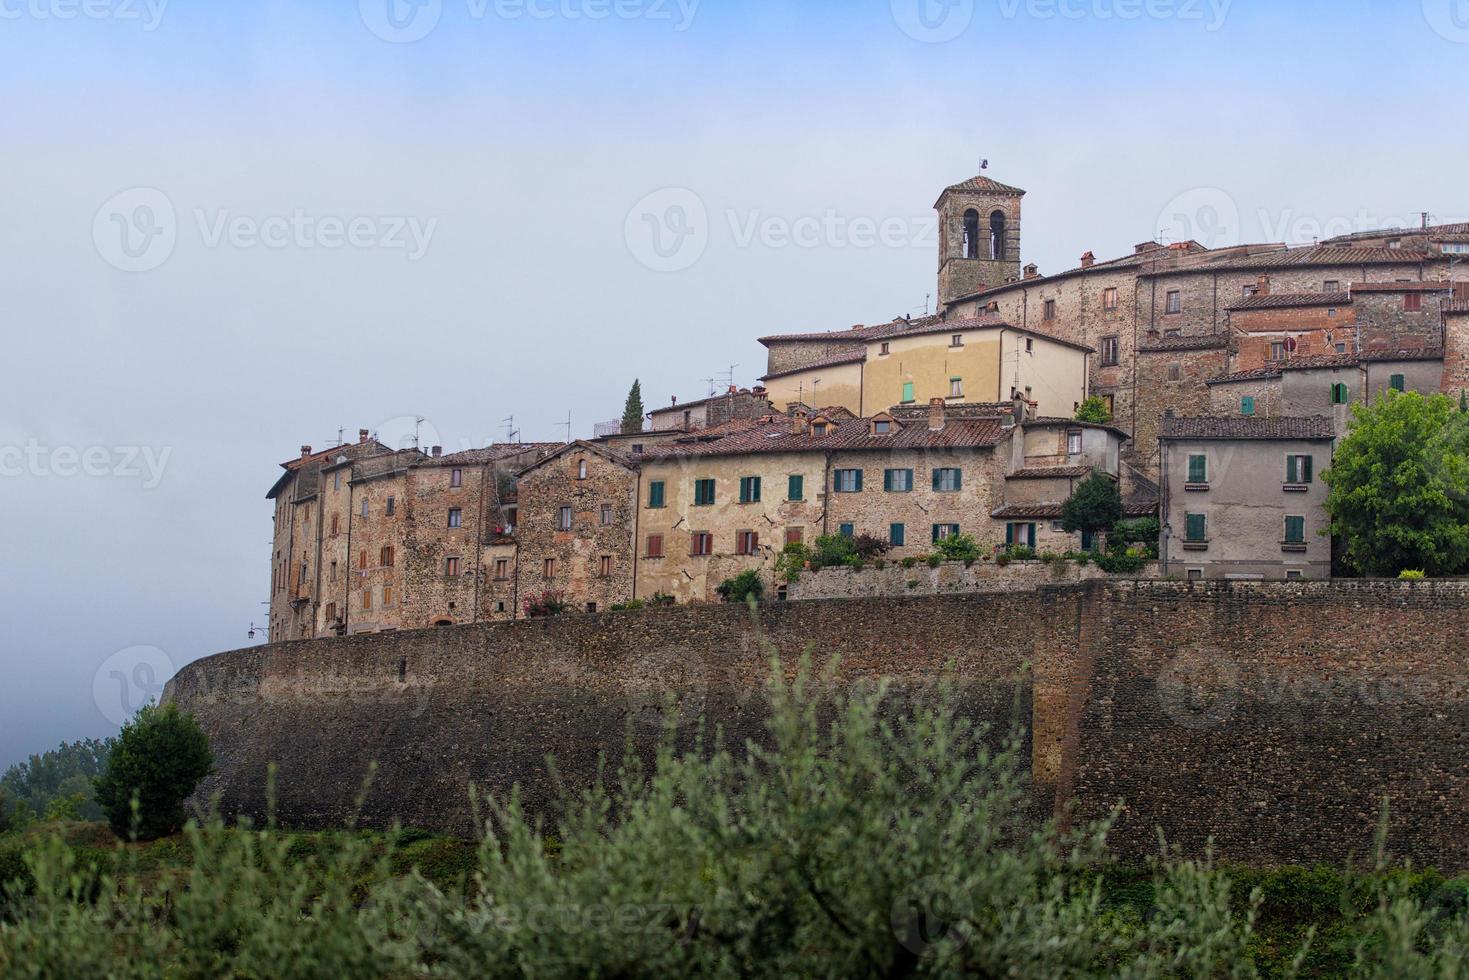 anghiari, middeleeuws dorp in Toscane - Italië foto